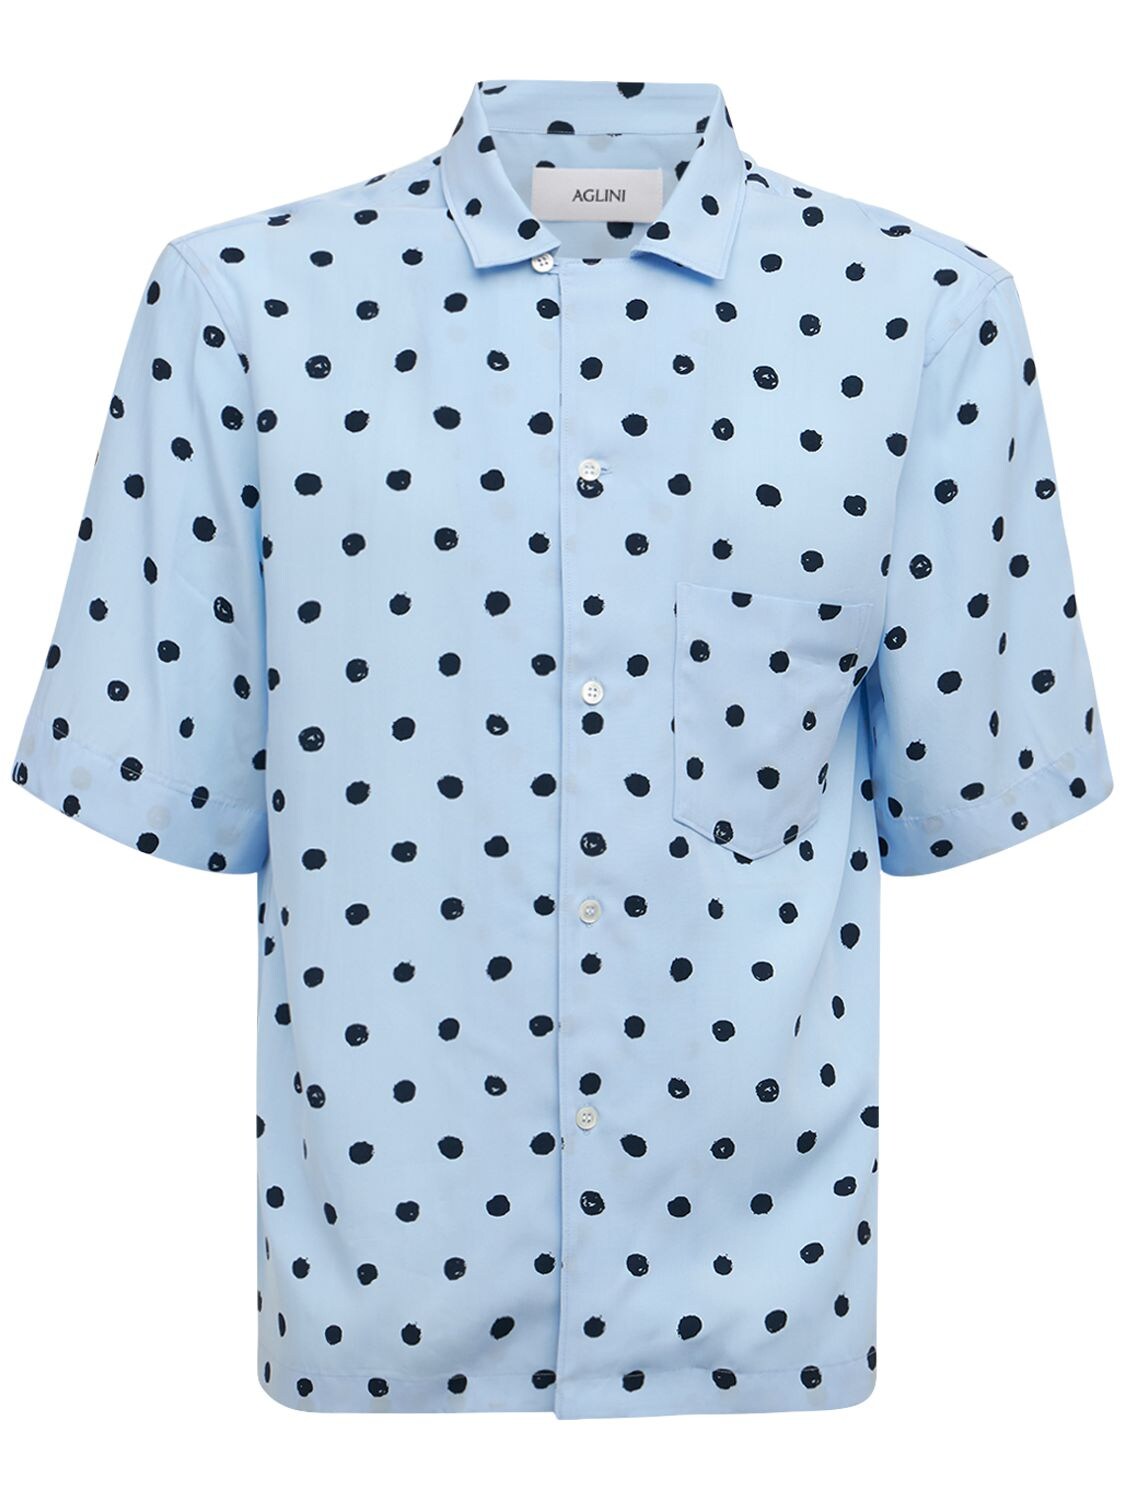 Aglini Polka Dot Shirt W/ Breast Pocket In Blue